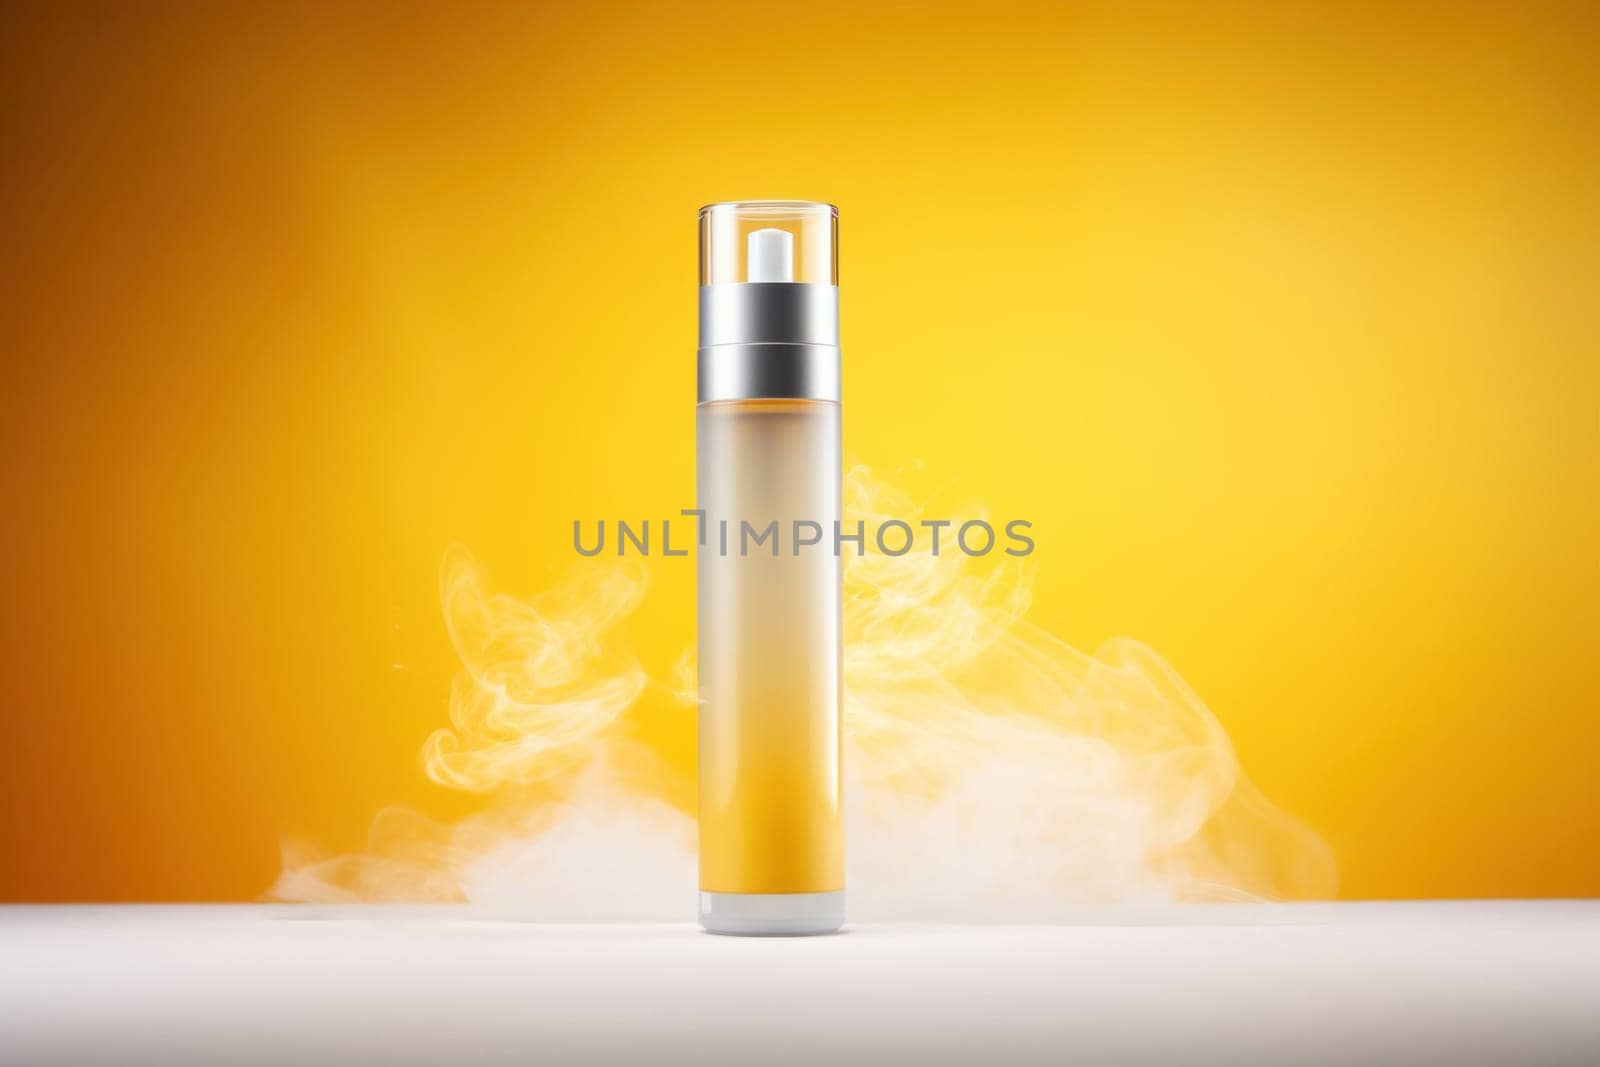 Elegant Perfume Bottle with Smoky Essence by ugguggu